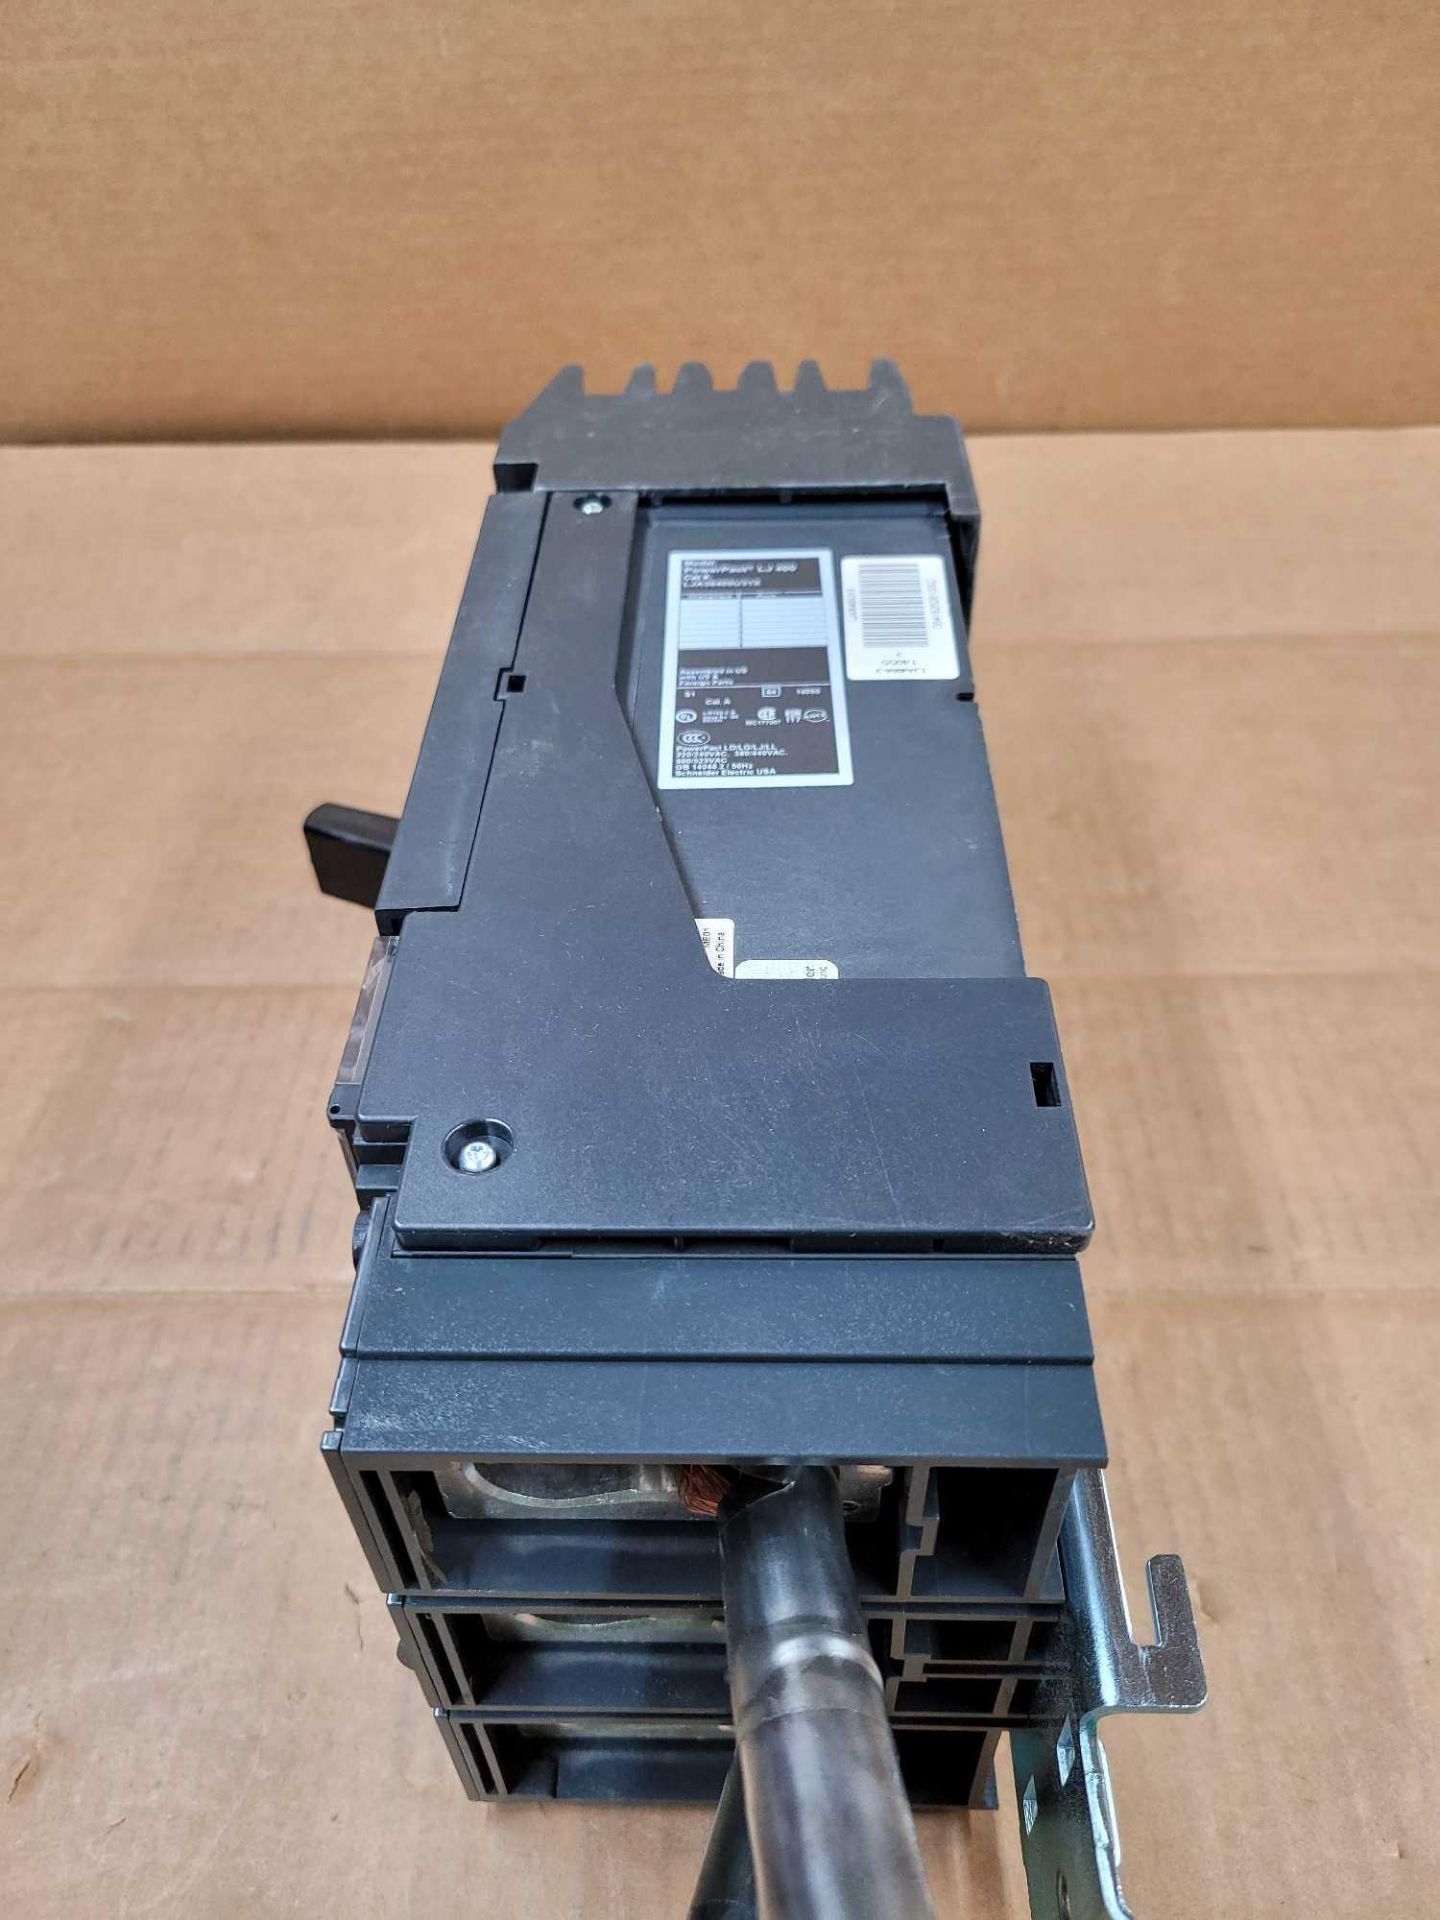 SQUARE D LJA36400U31X / 400 Amp Molded Case Circuit Breaker  /  Lot Weight: 17.2 lbs - Image 5 of 6